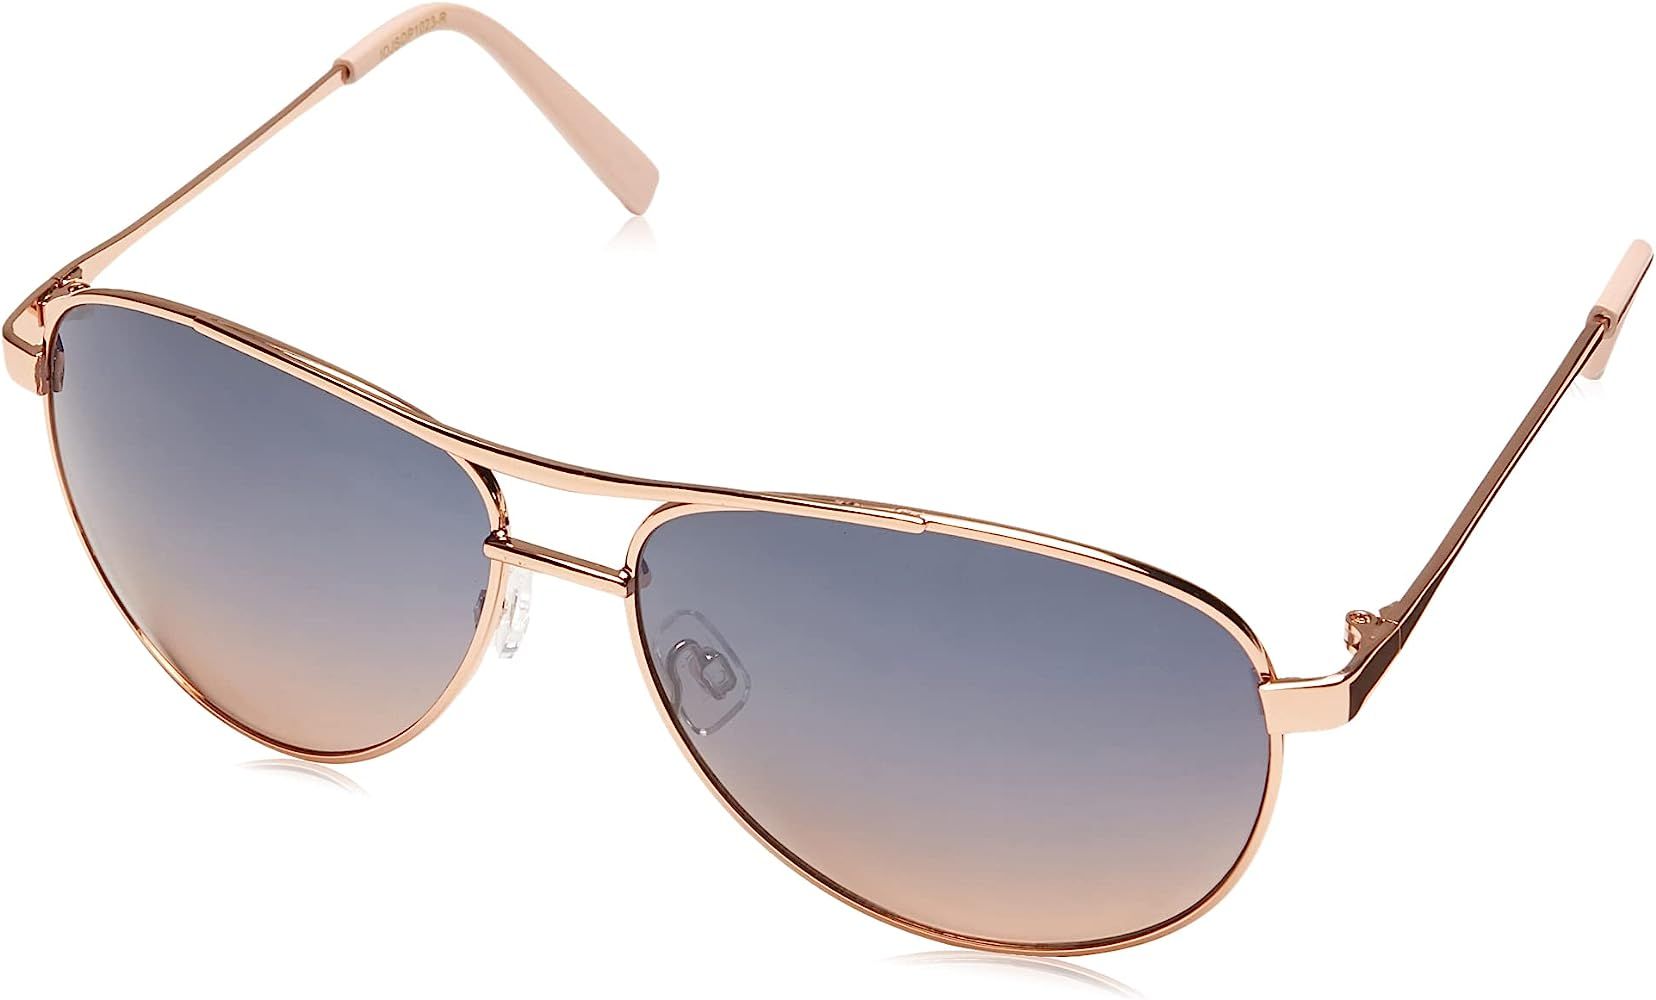 Jessica Simpson J106 Iconic Metal UV Protective Women's Aviator Sunglasses. Glam Gifts for Women, 59 | Amazon (US)